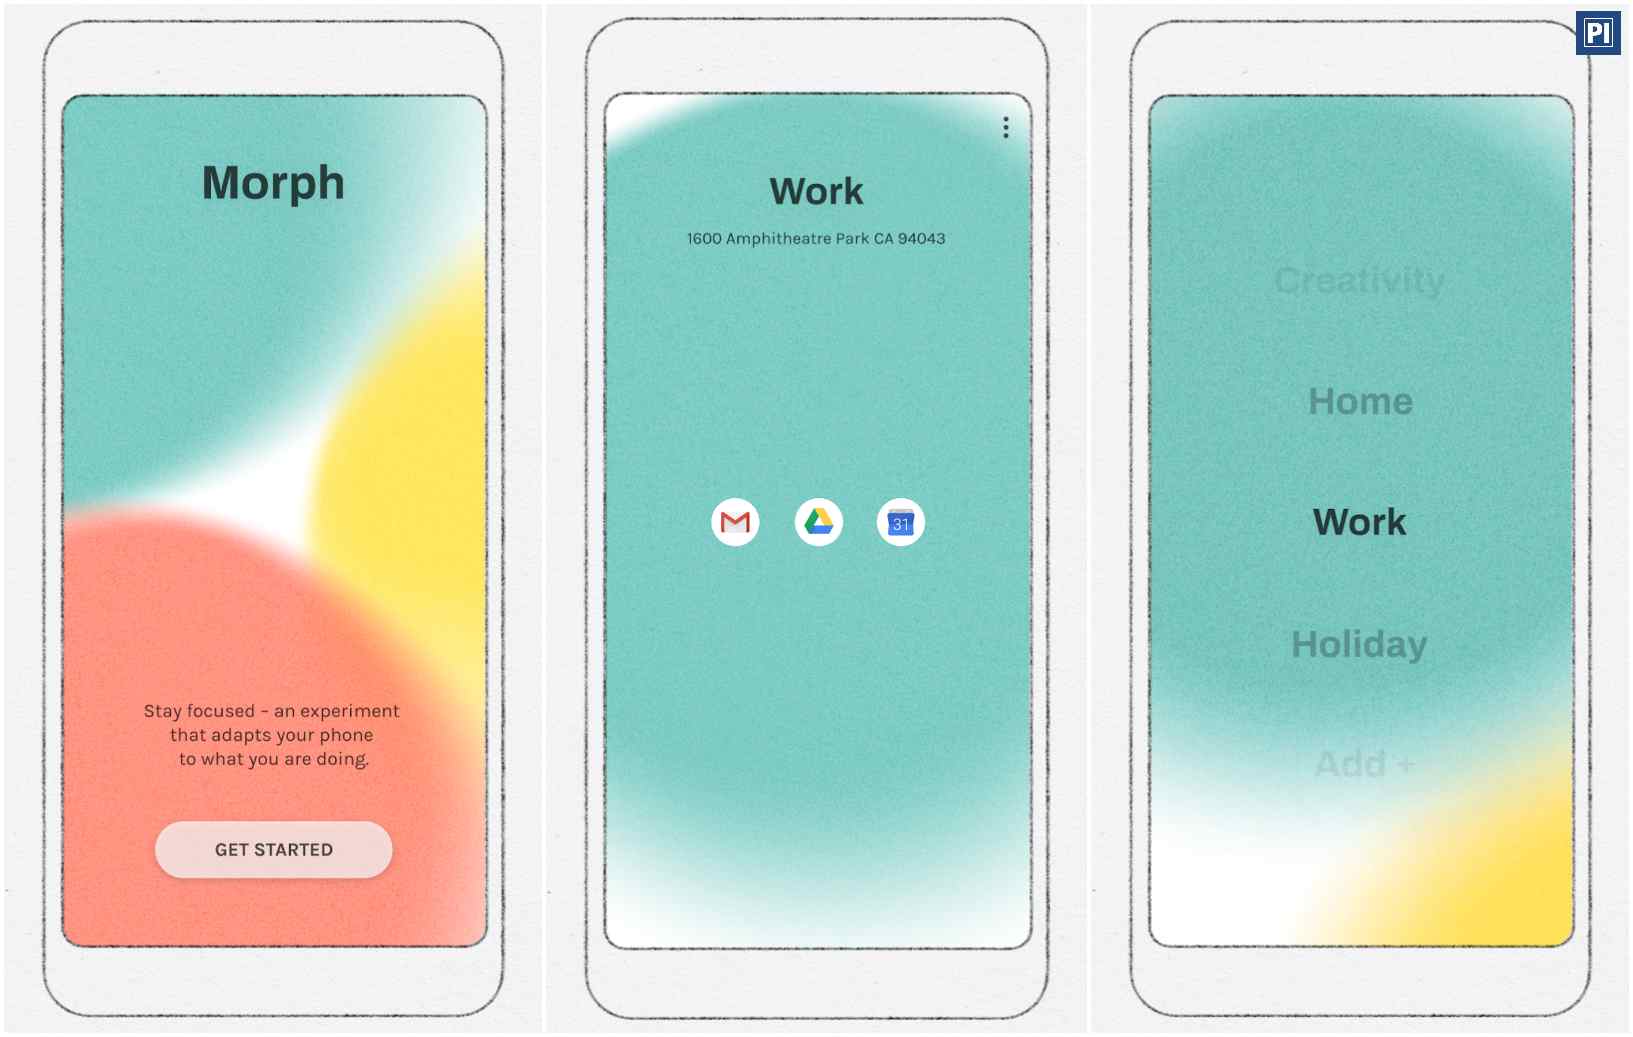 Morph - Top apps November 2019